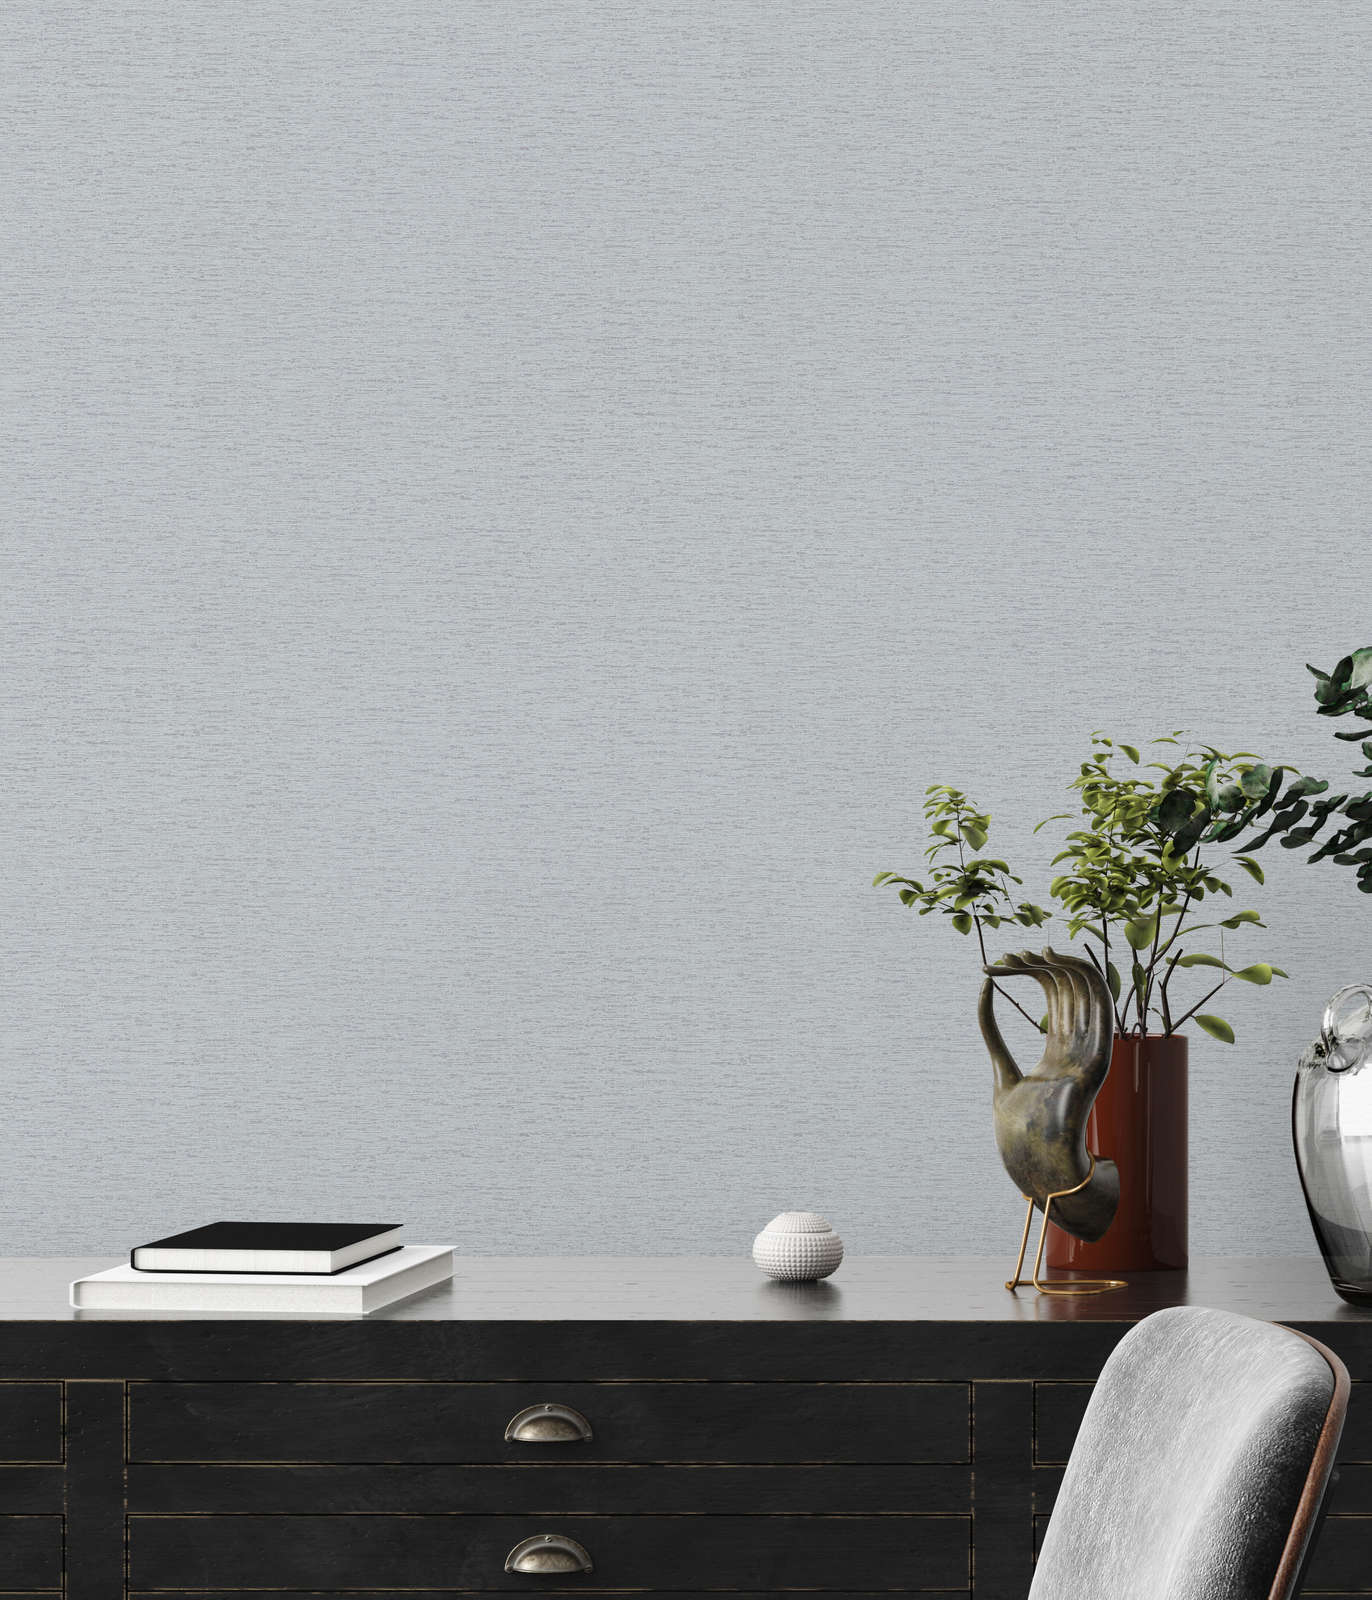             Plain non-woven wallpaper in textile look with light structure, matt - grey, light grey
        